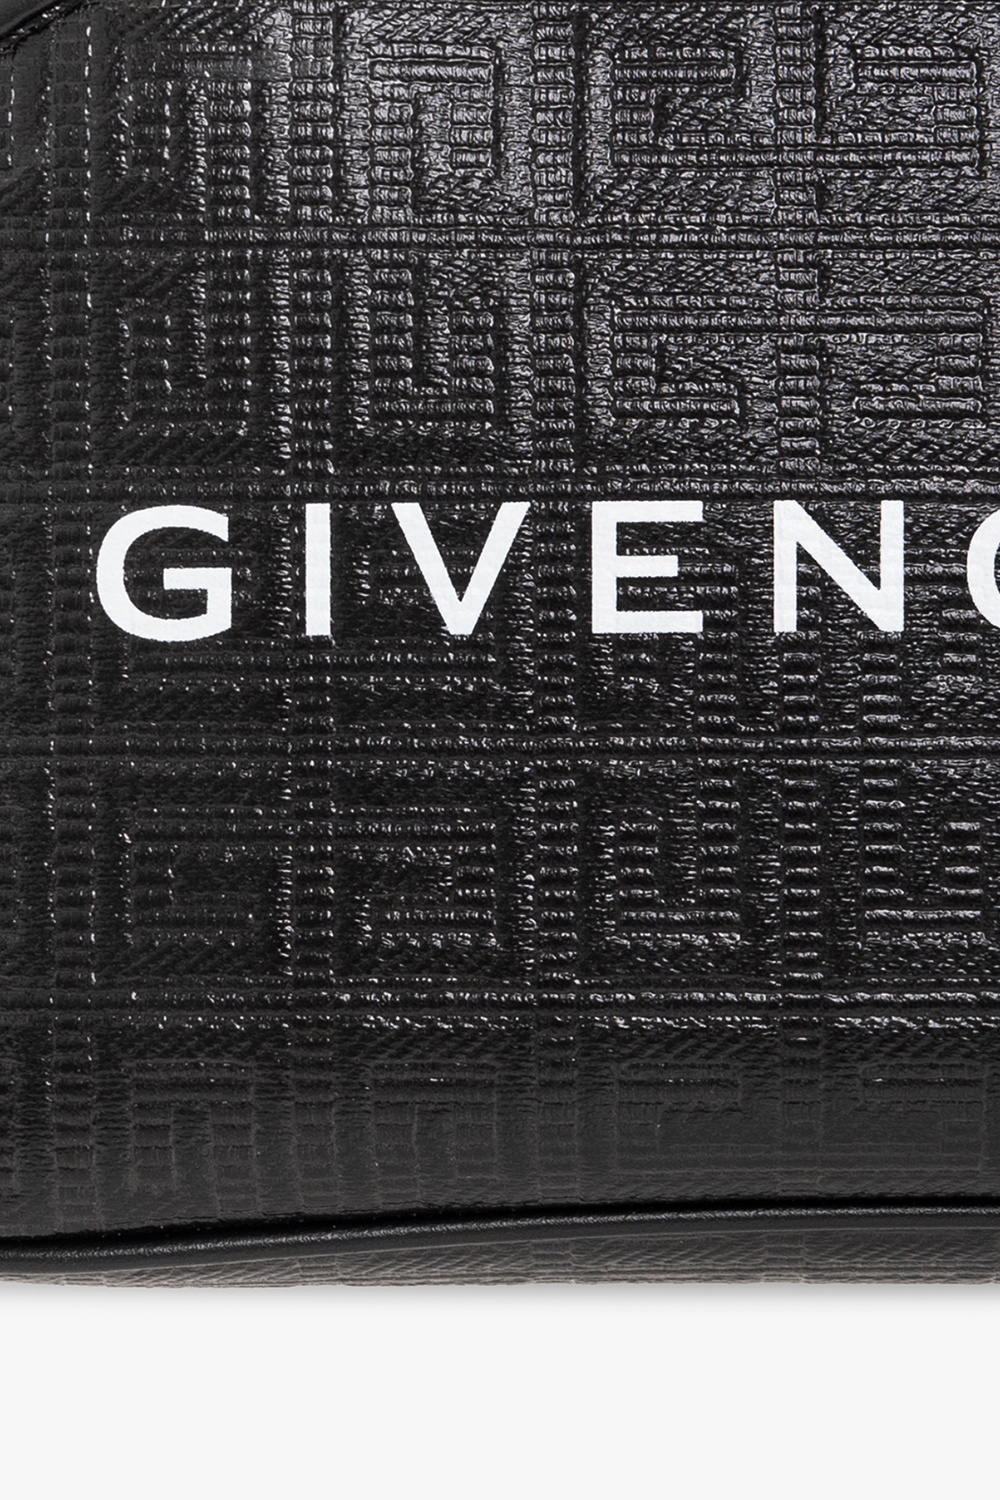 Givenchy Monogrammed wash bag